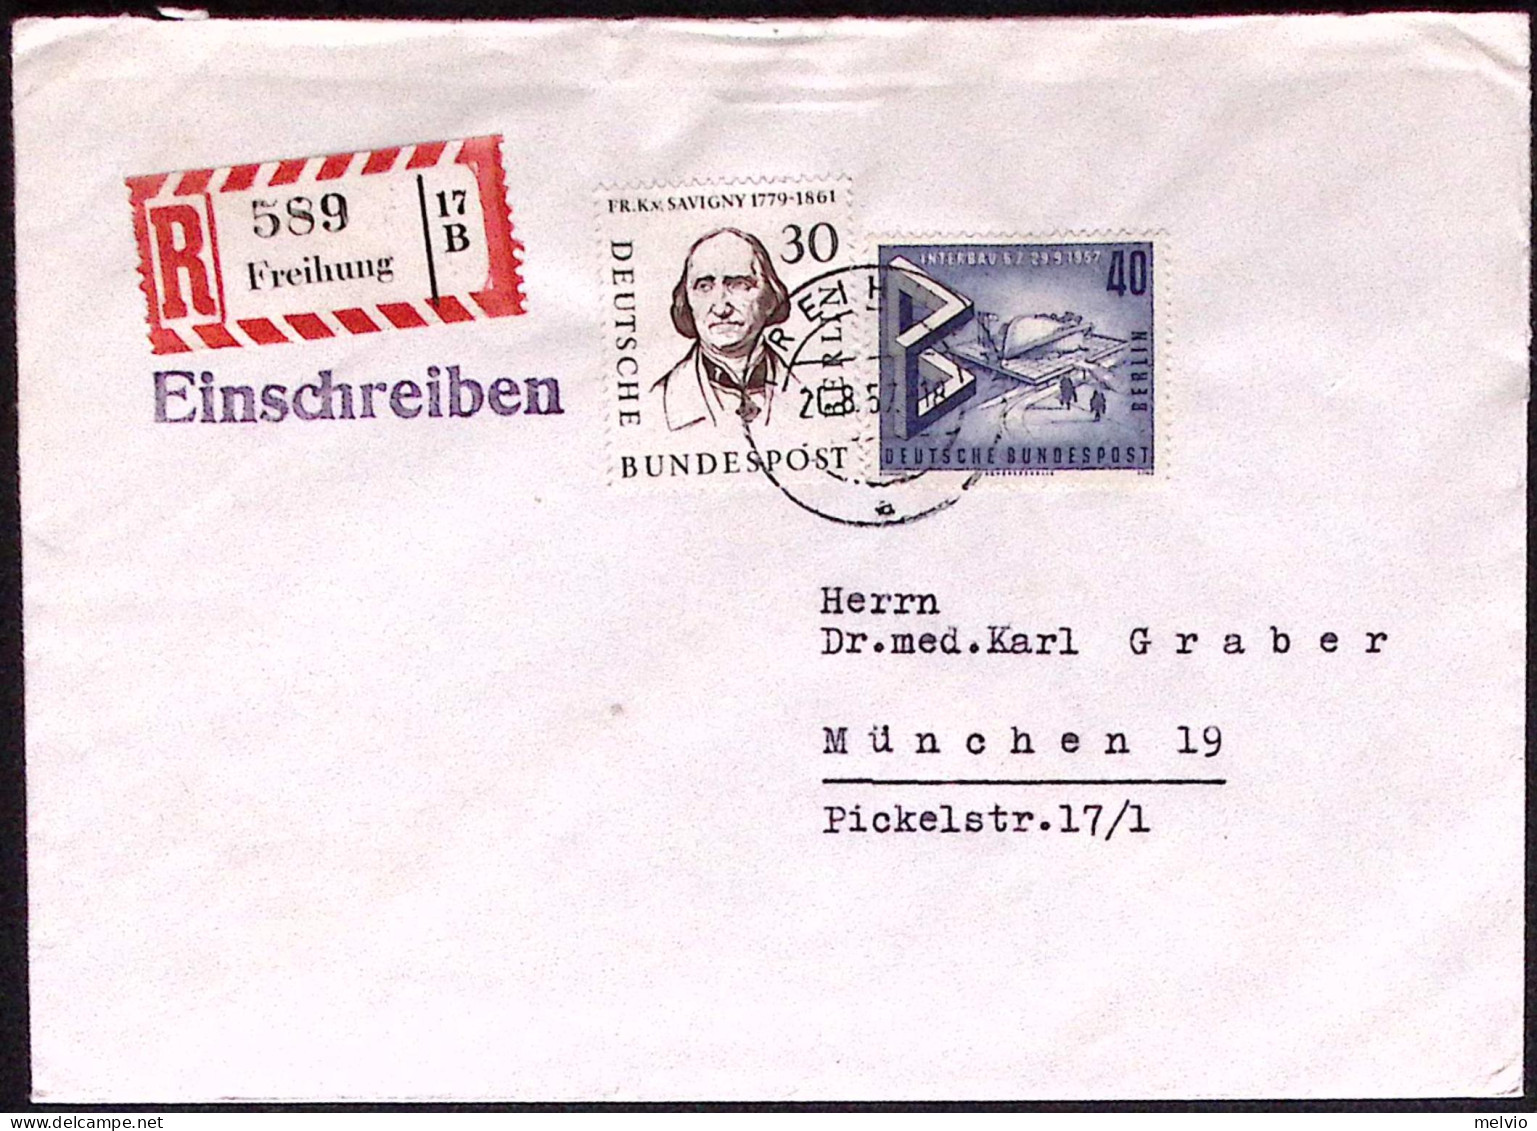 1957-Germania Raccoamandata Affrancata Con Due Valori Commemorativi - Covers & Documents